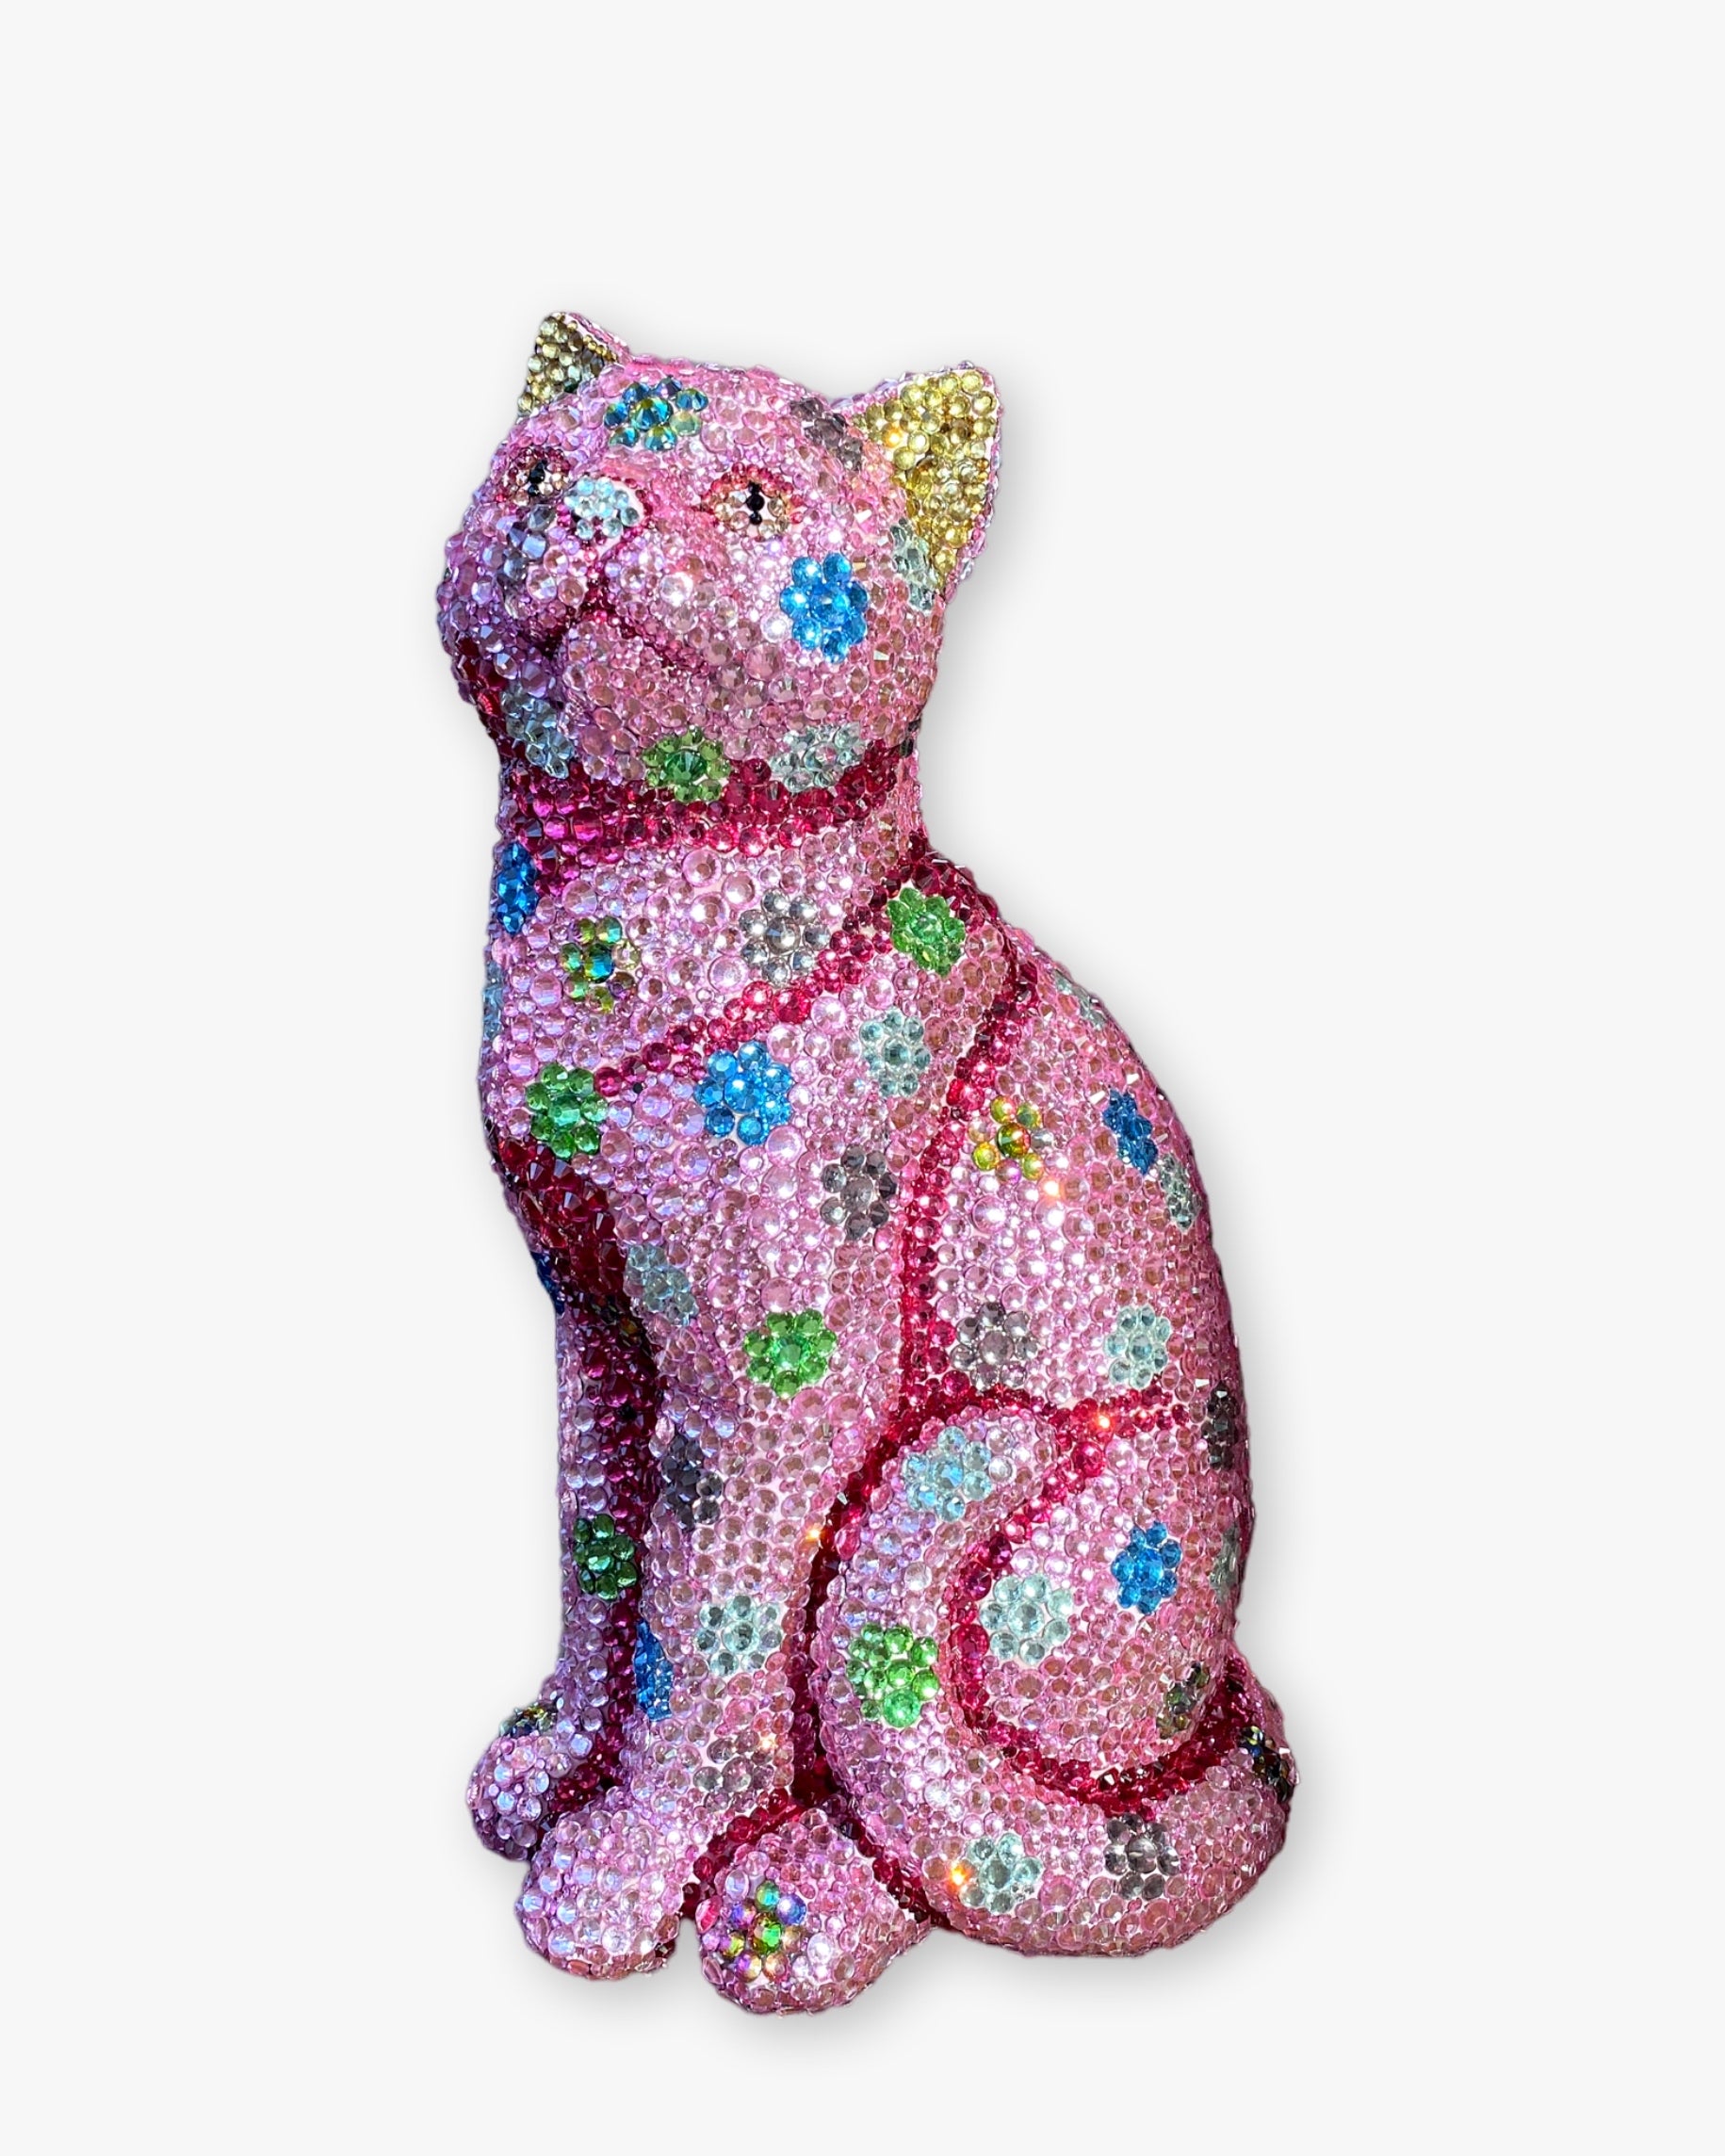 Pink Polka Dot Crystal Cat Sculpture